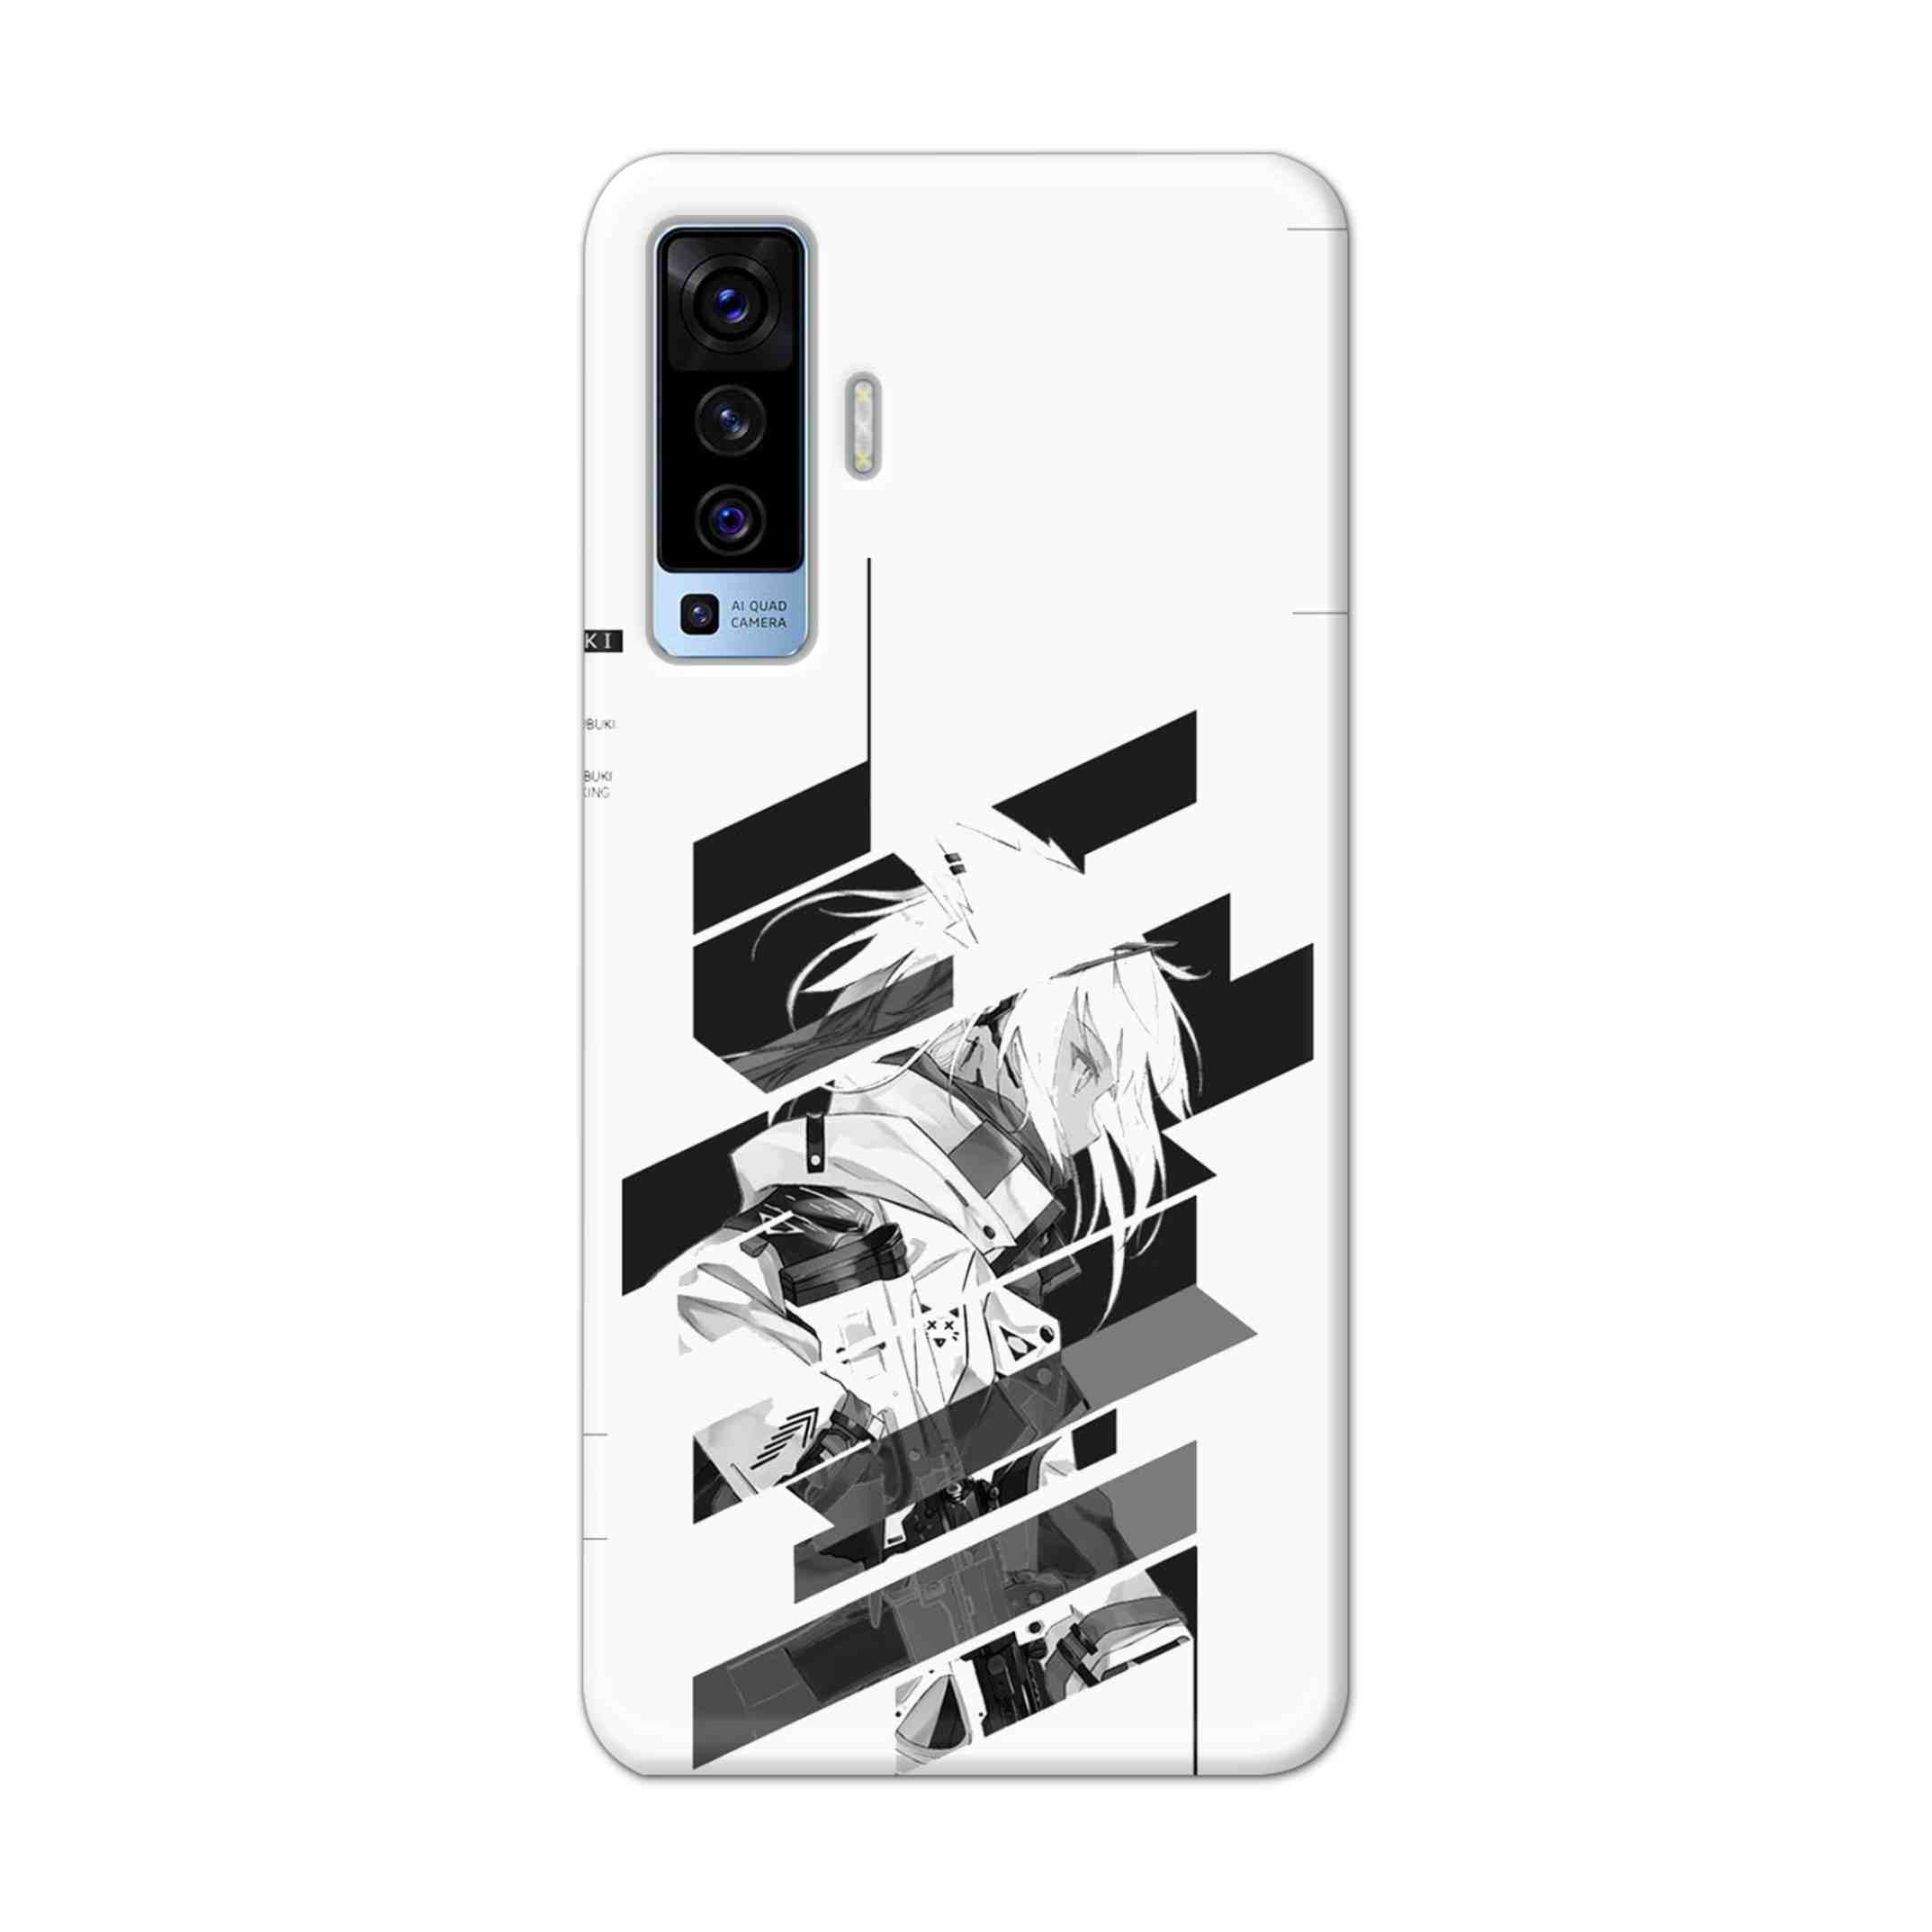 Buy Fubuki Hard Back Mobile Phone Case Cover For Vivo X50 Online